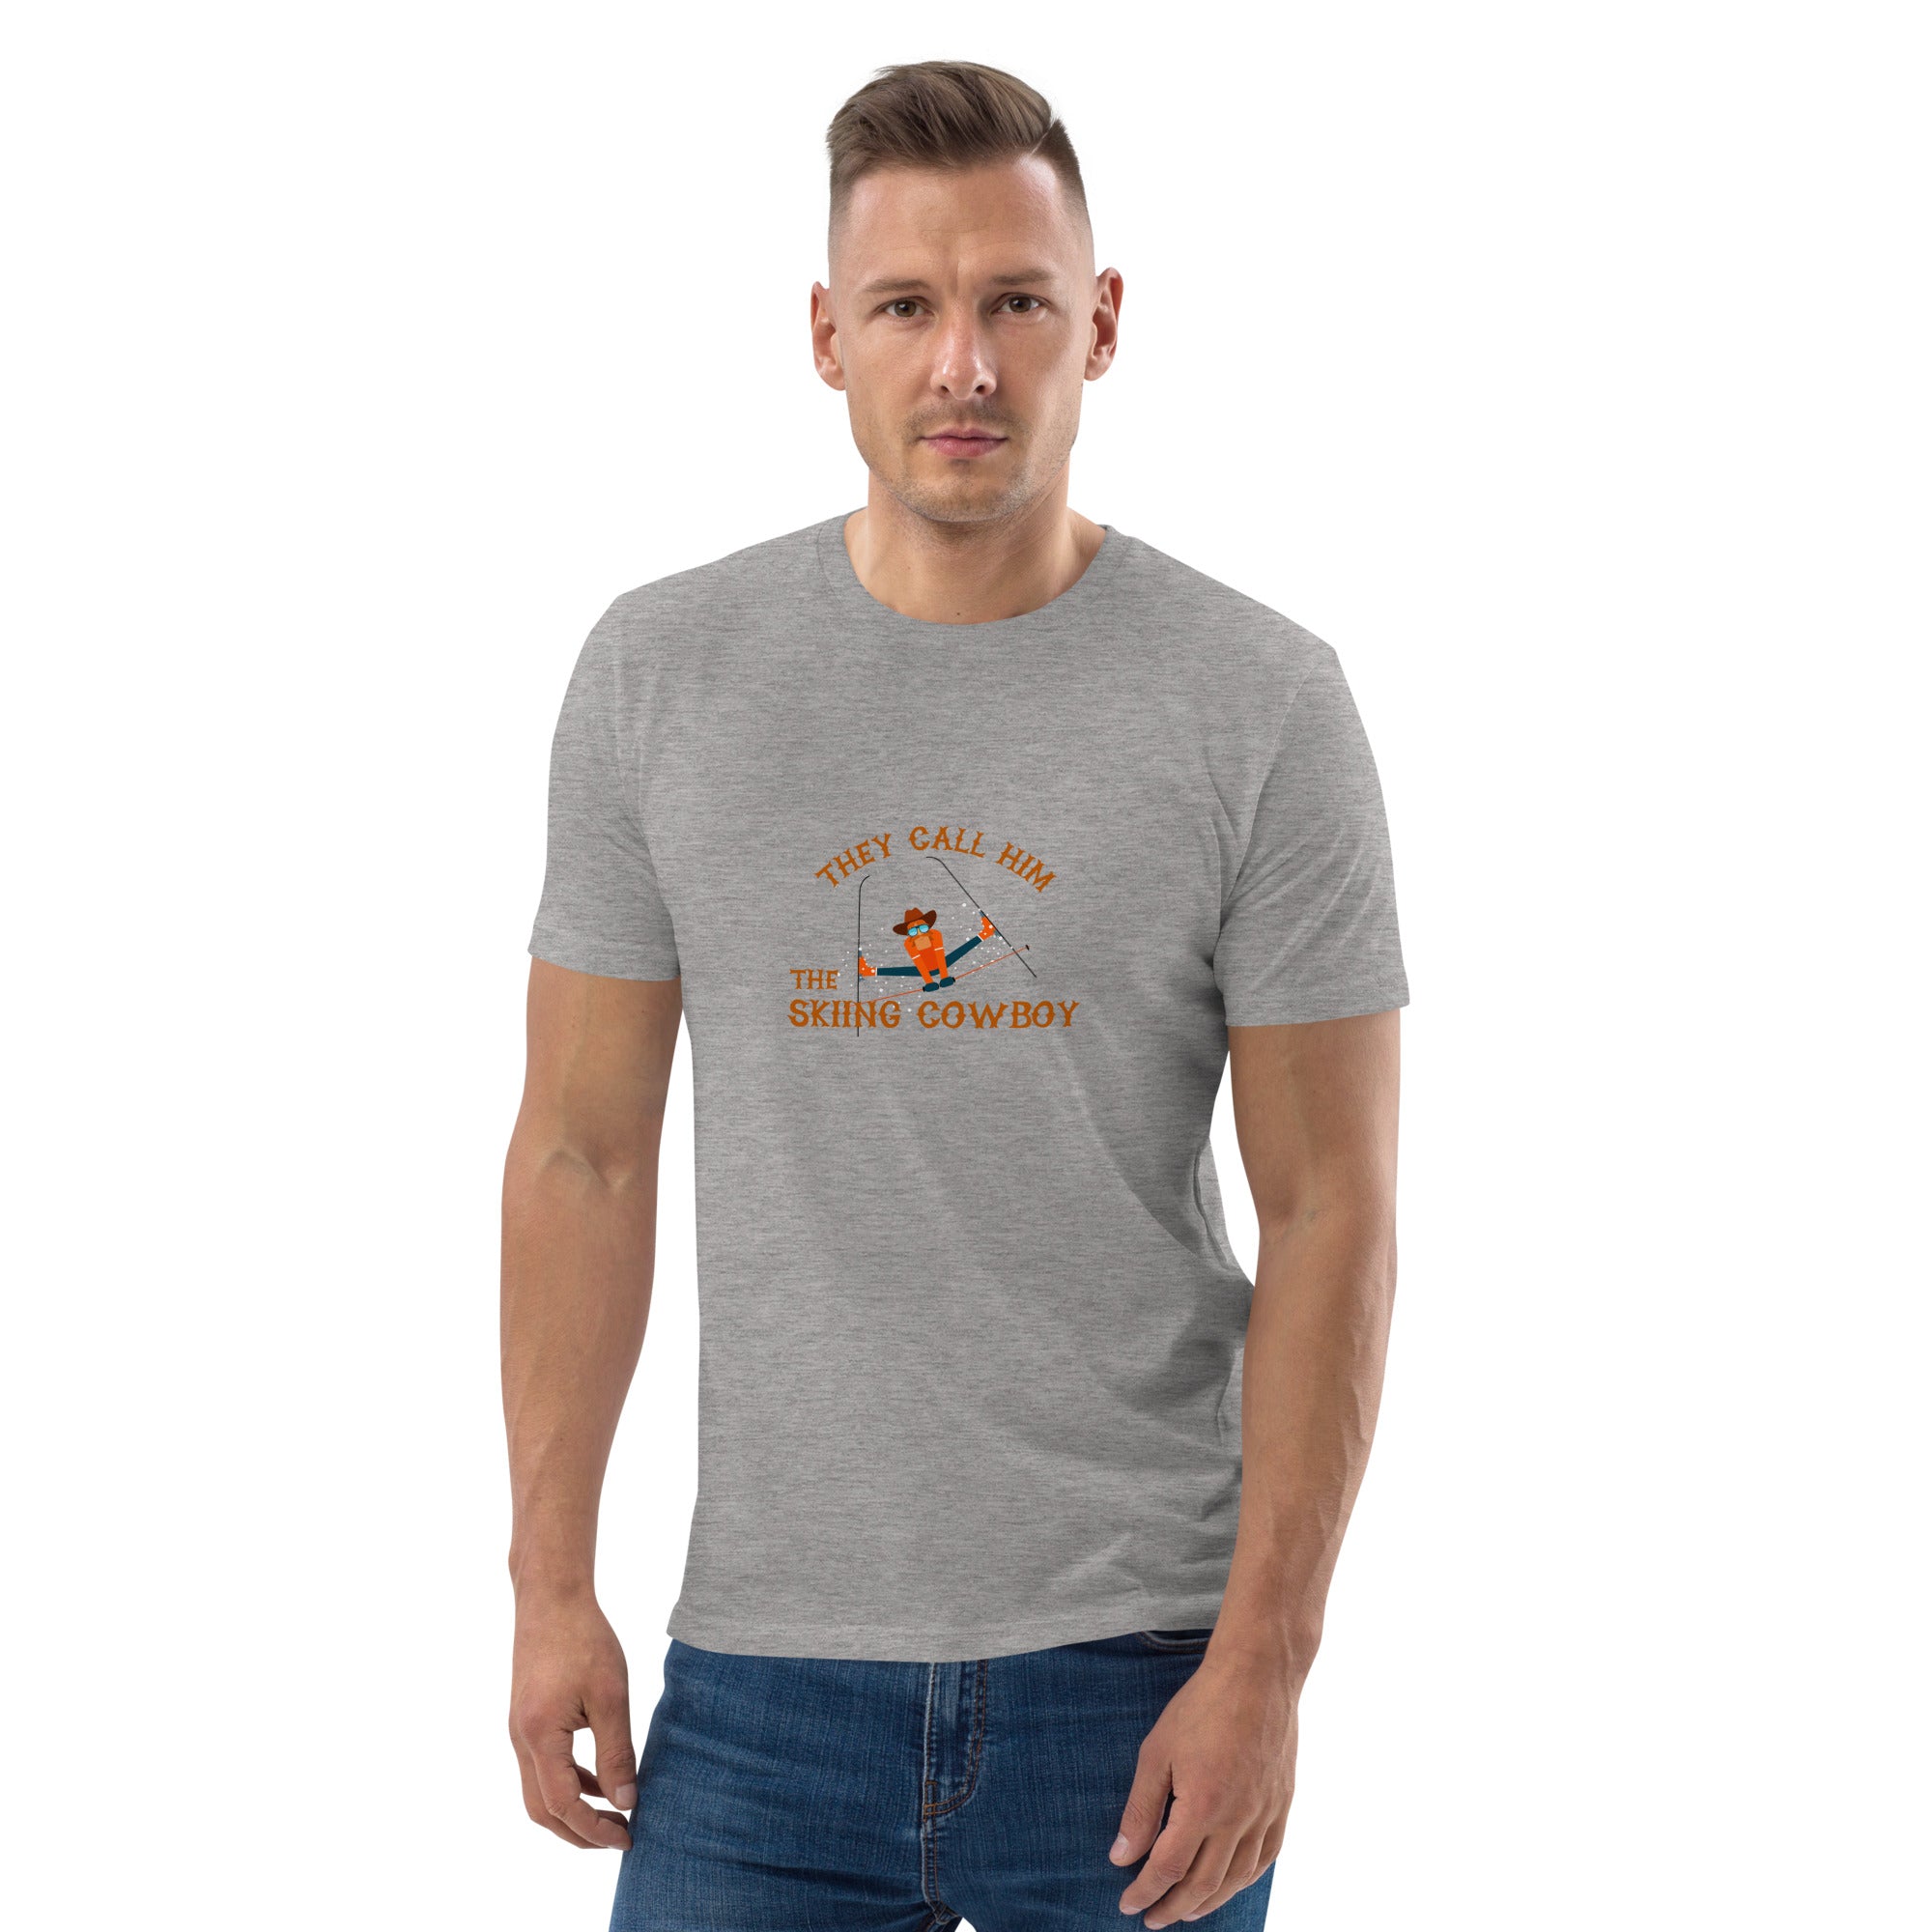 Unisex organic cotton t-shirt Hot Dogger on light colors